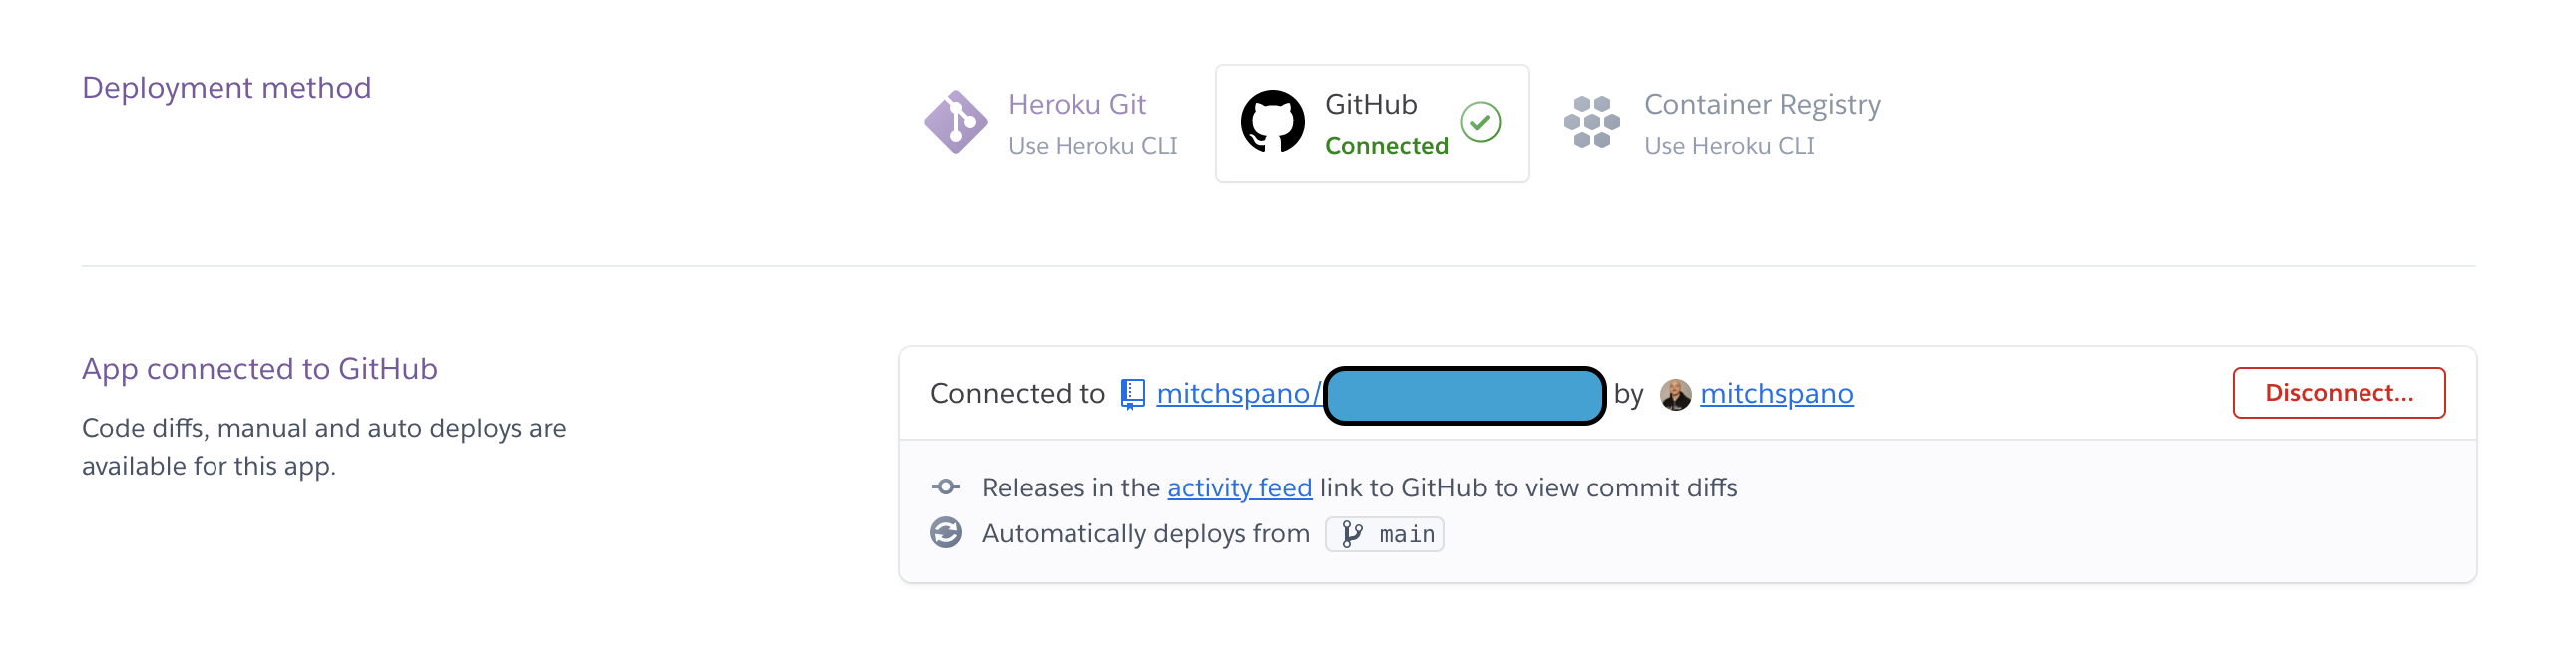 GitHub connection image